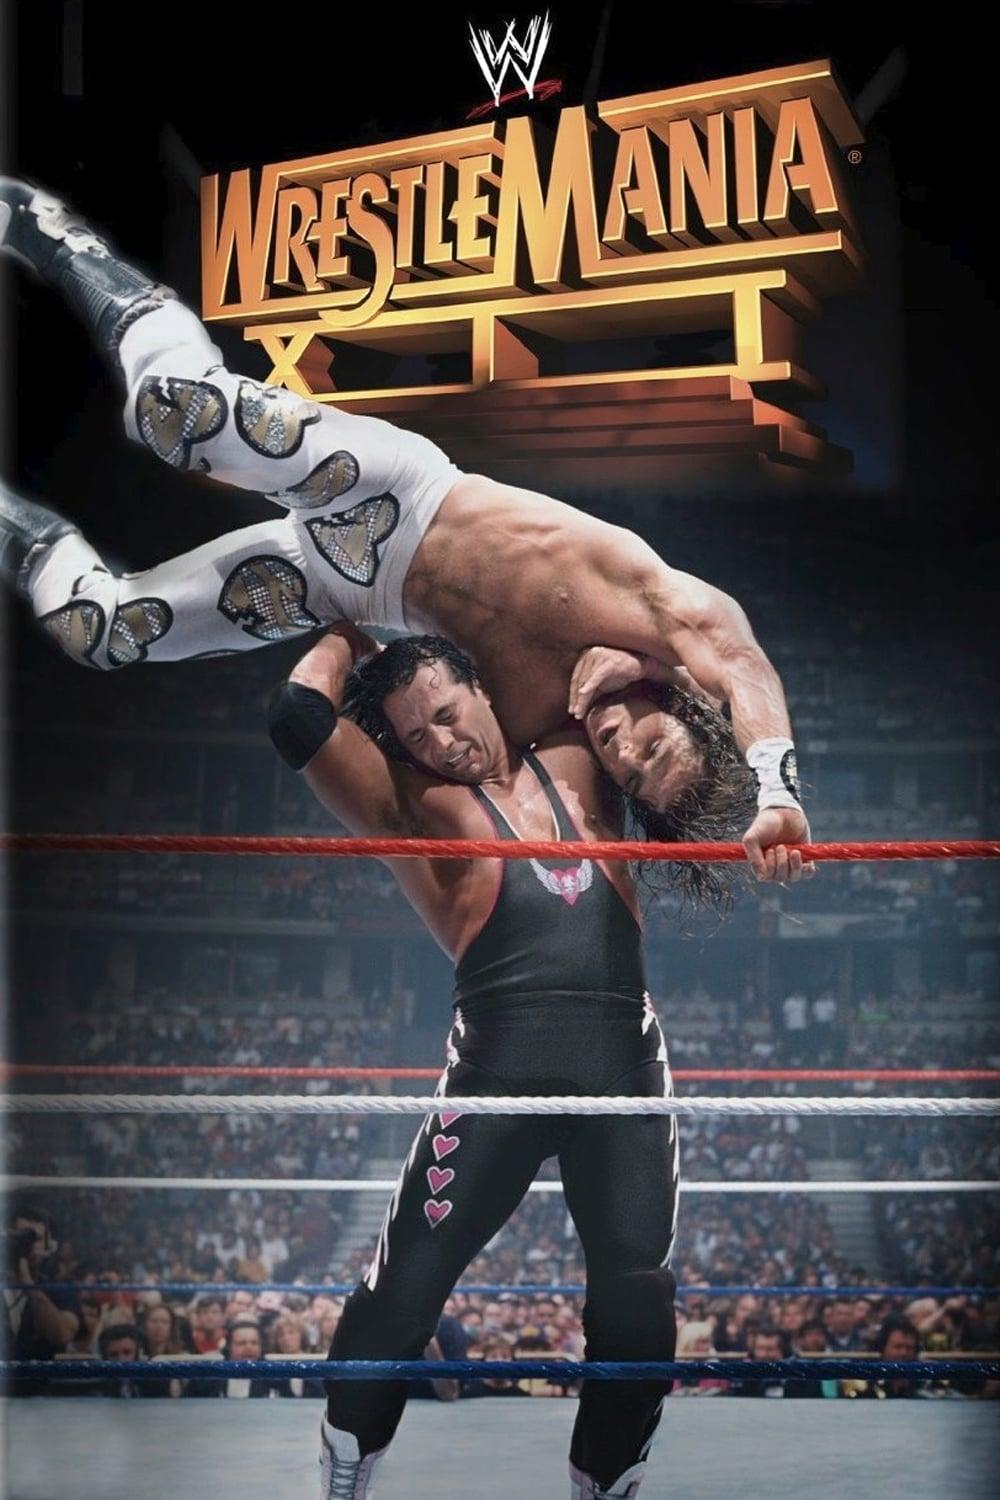 WWE WrestleMania XII poster